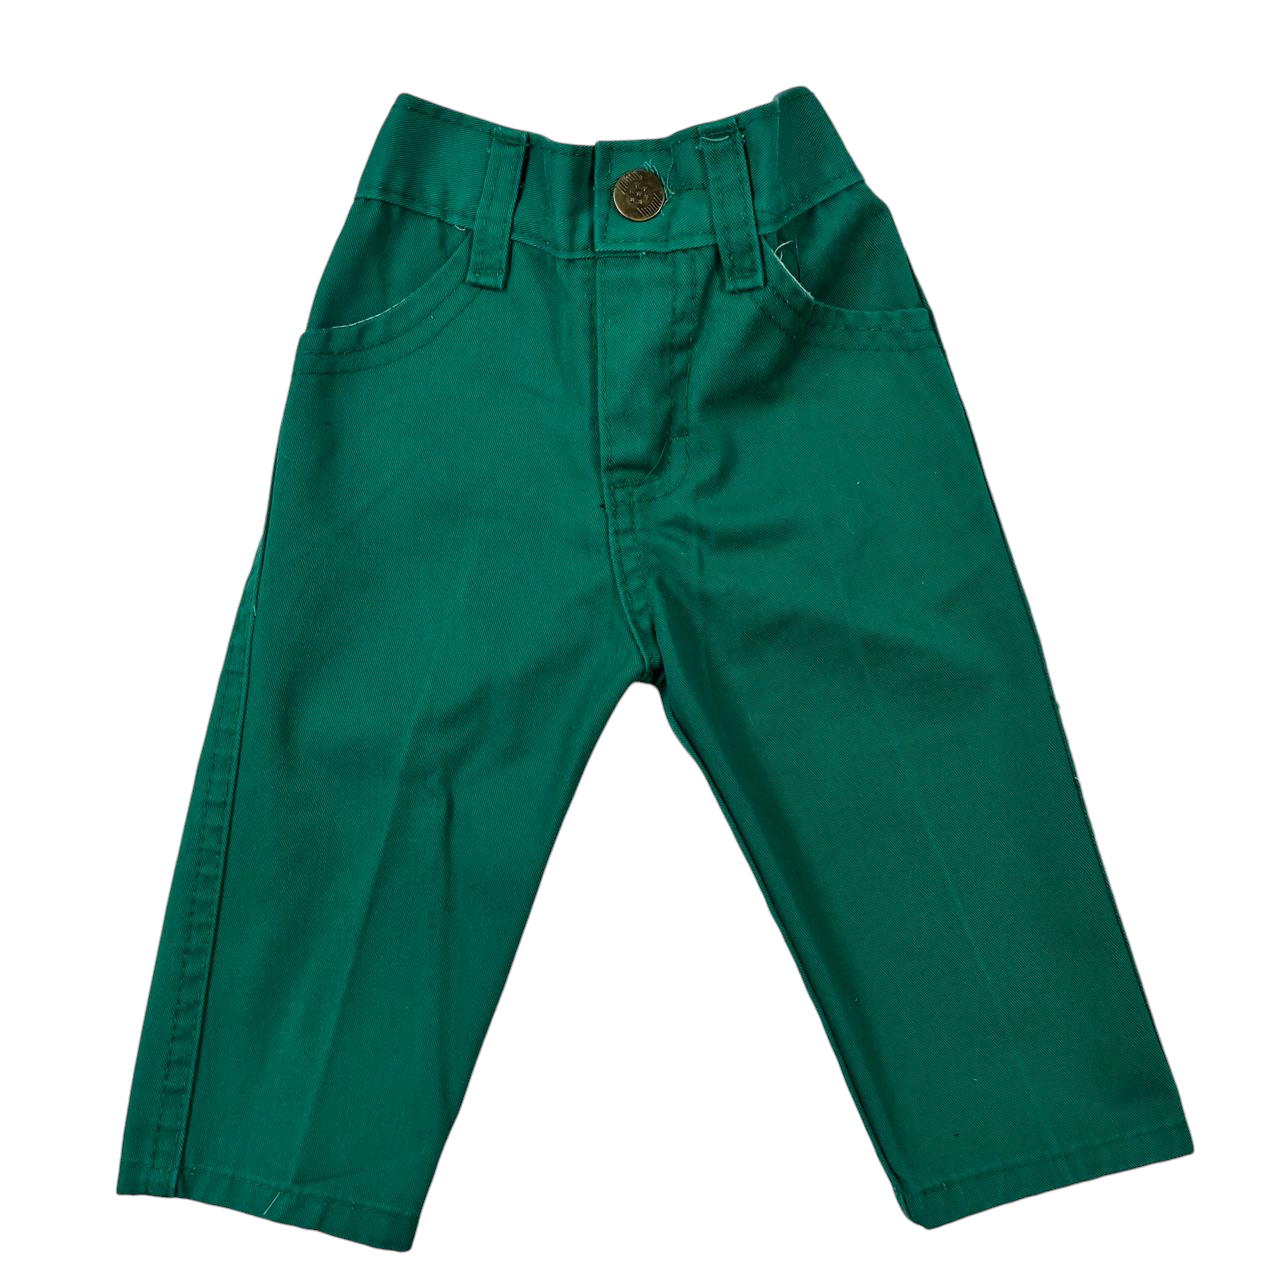 Pantalon verde bolsillos falsos